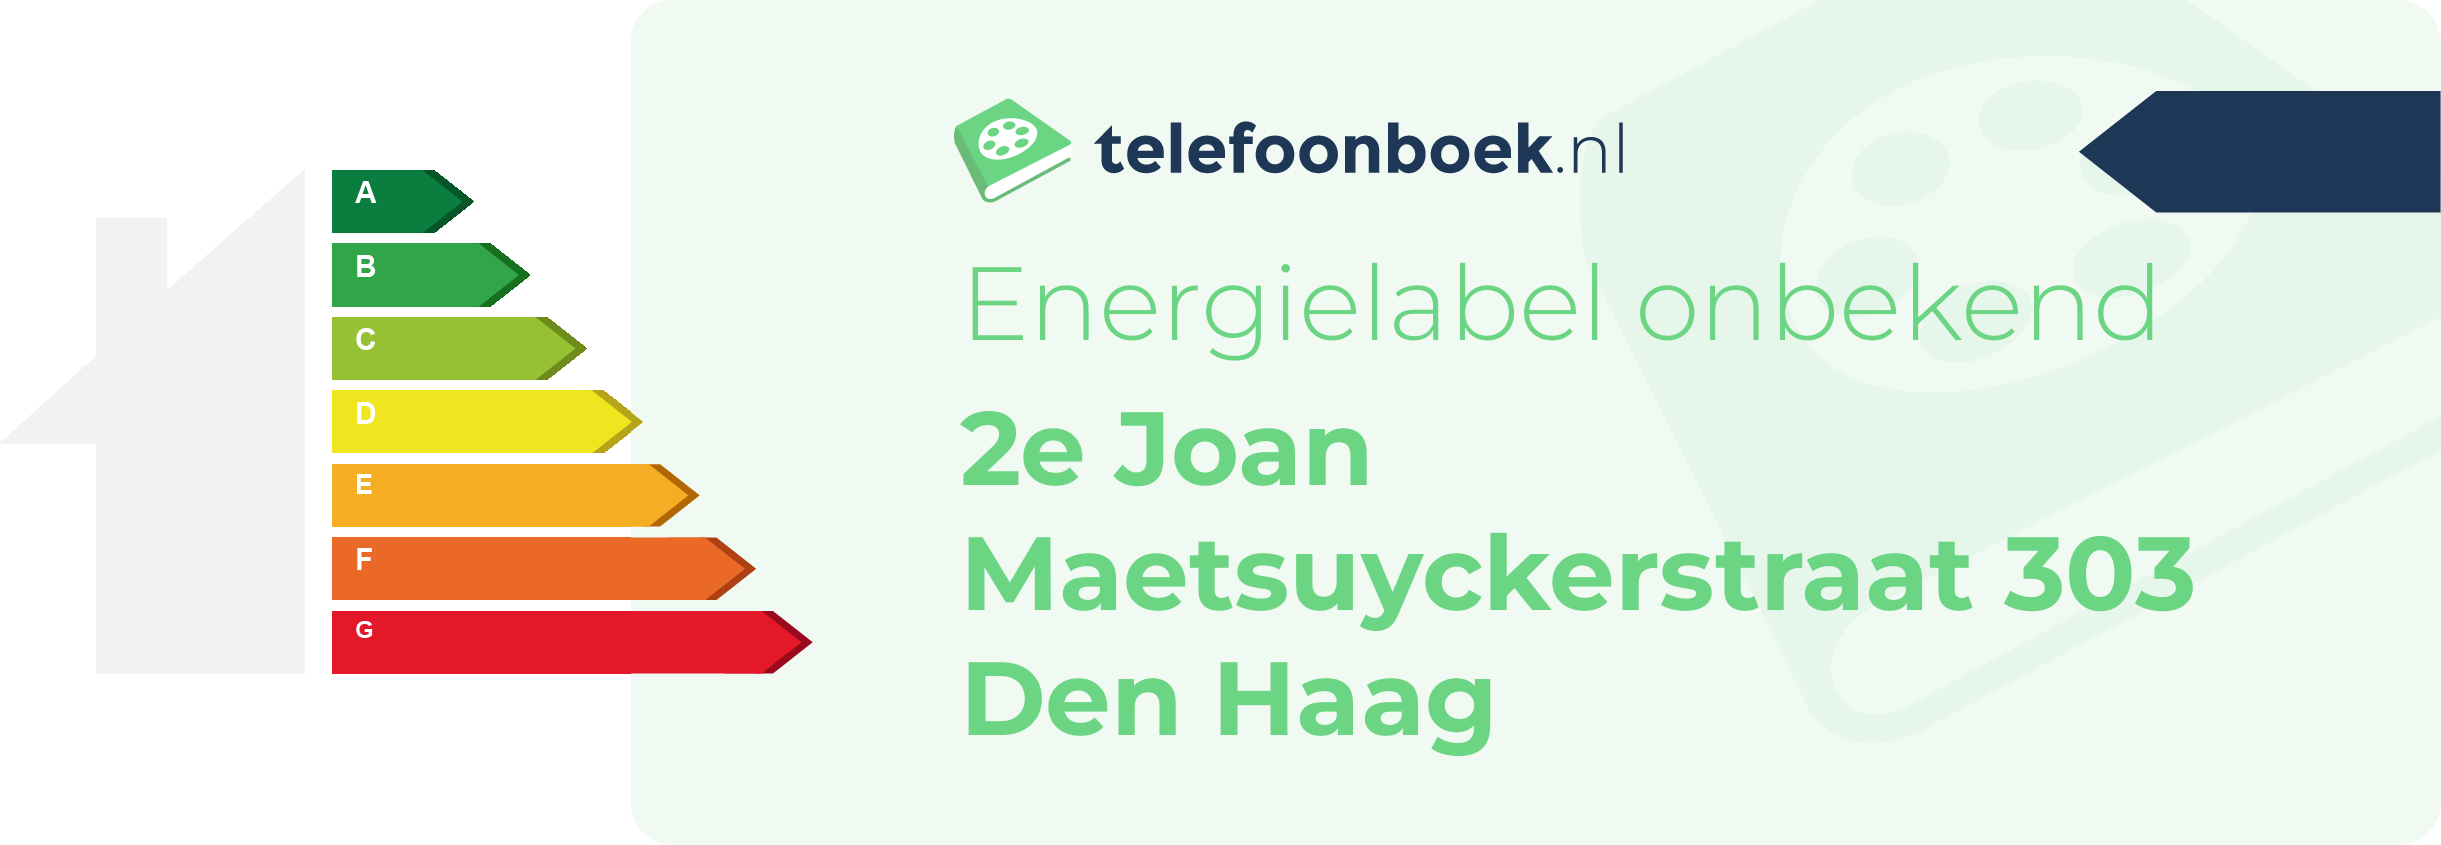 Energielabel 2e Joan Maetsuyckerstraat 303 Den Haag